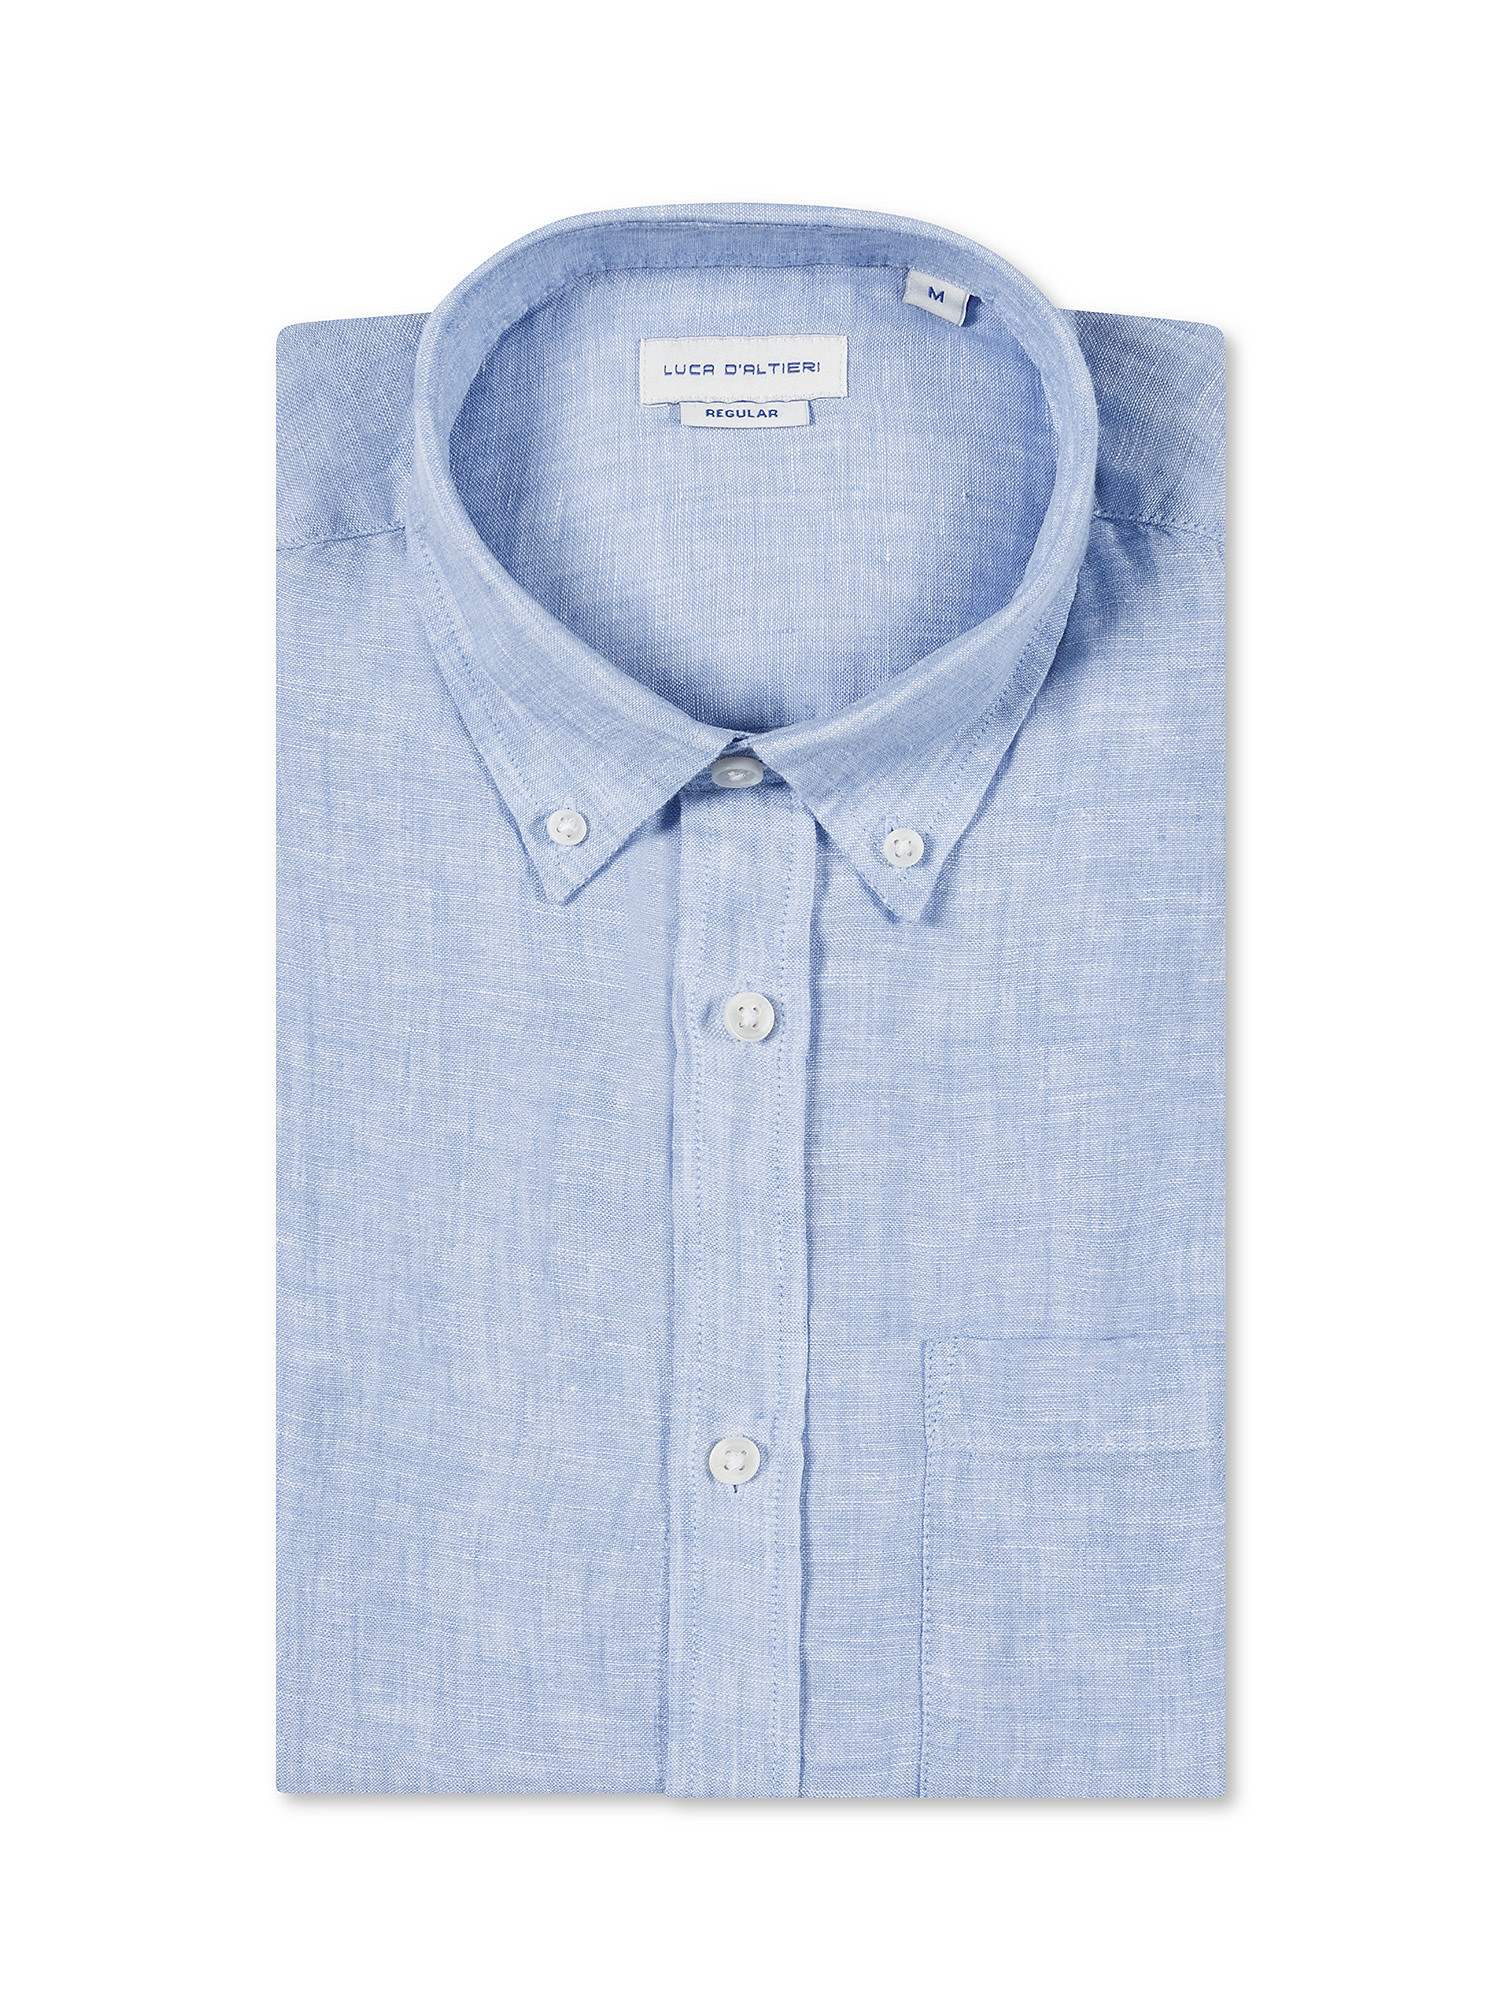 Luca D'Altieri - Camicia regular fit in puro lino, Azzurro, large image number 2